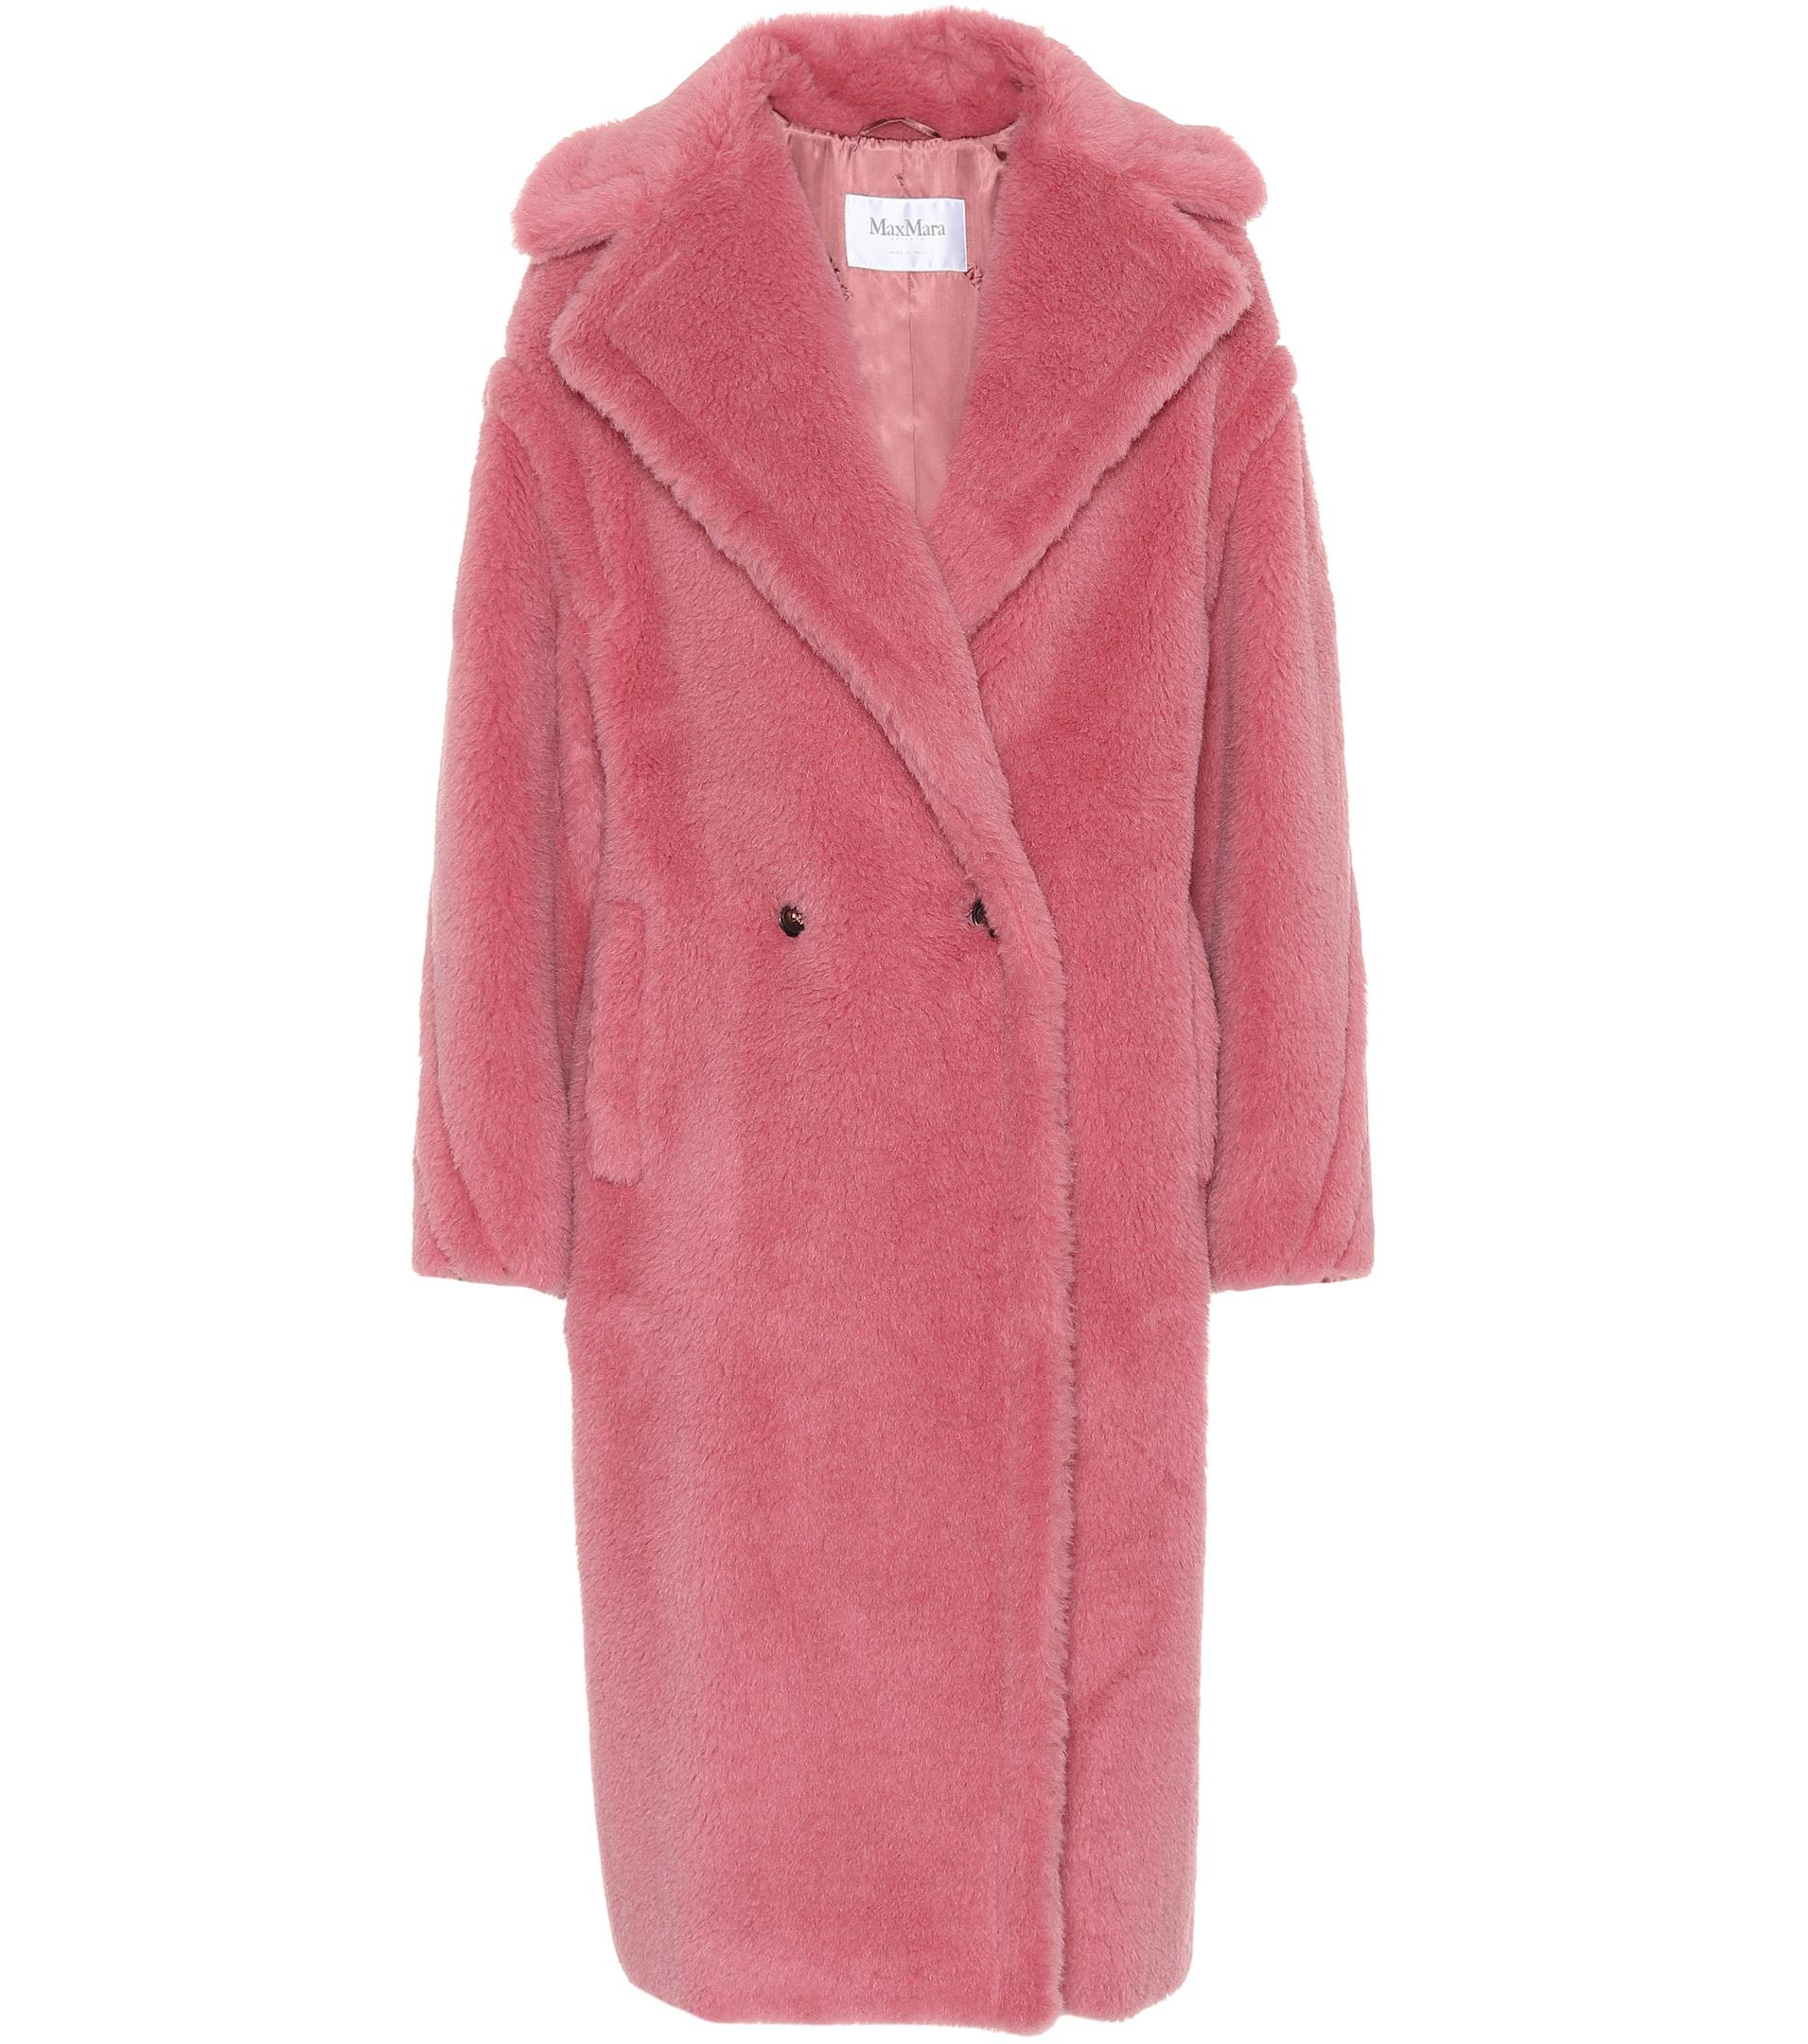 Max Mara Tapioca Wool-blend Teddy Coat in Pink - Lyst